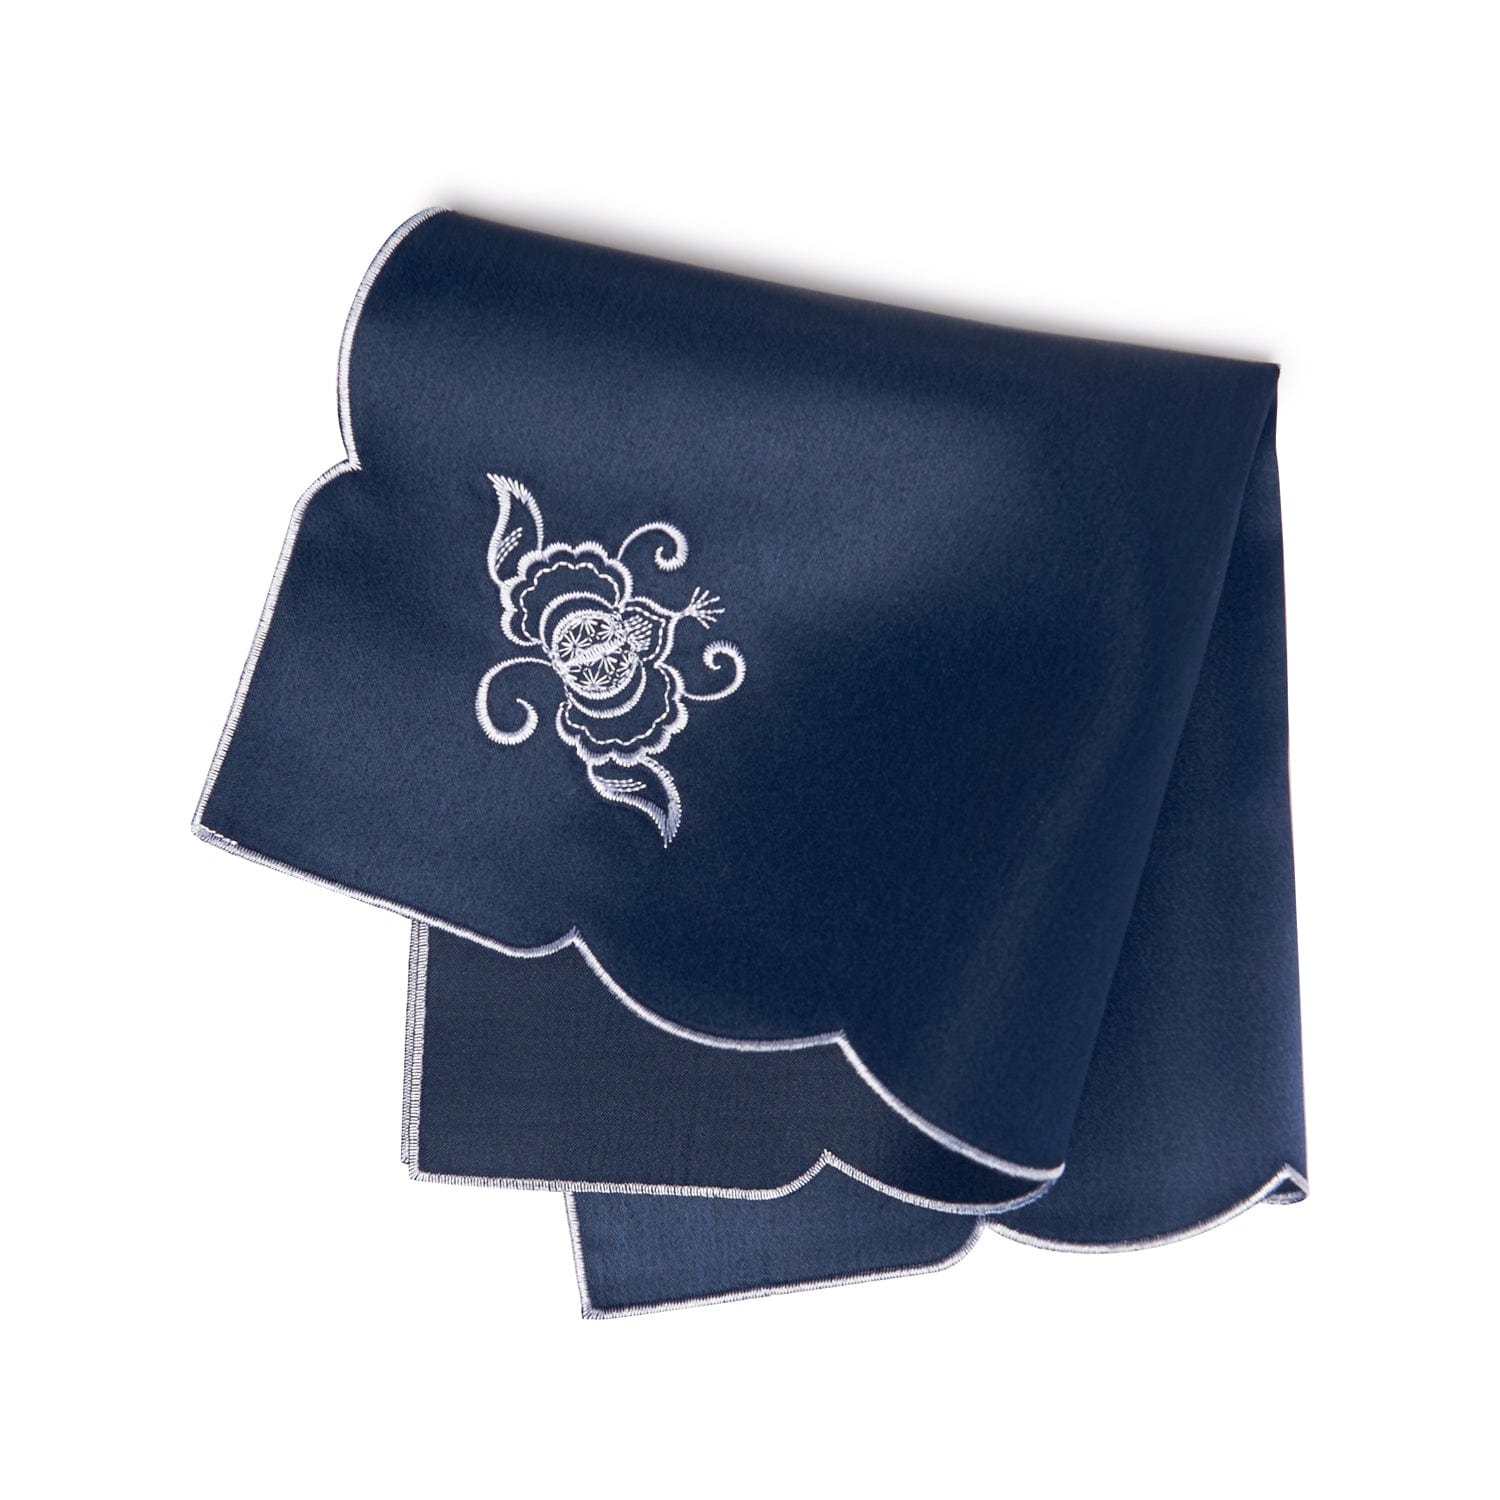 Paramount Midnight Blue Satin With White Embroidery Napkin 4Pcs Set